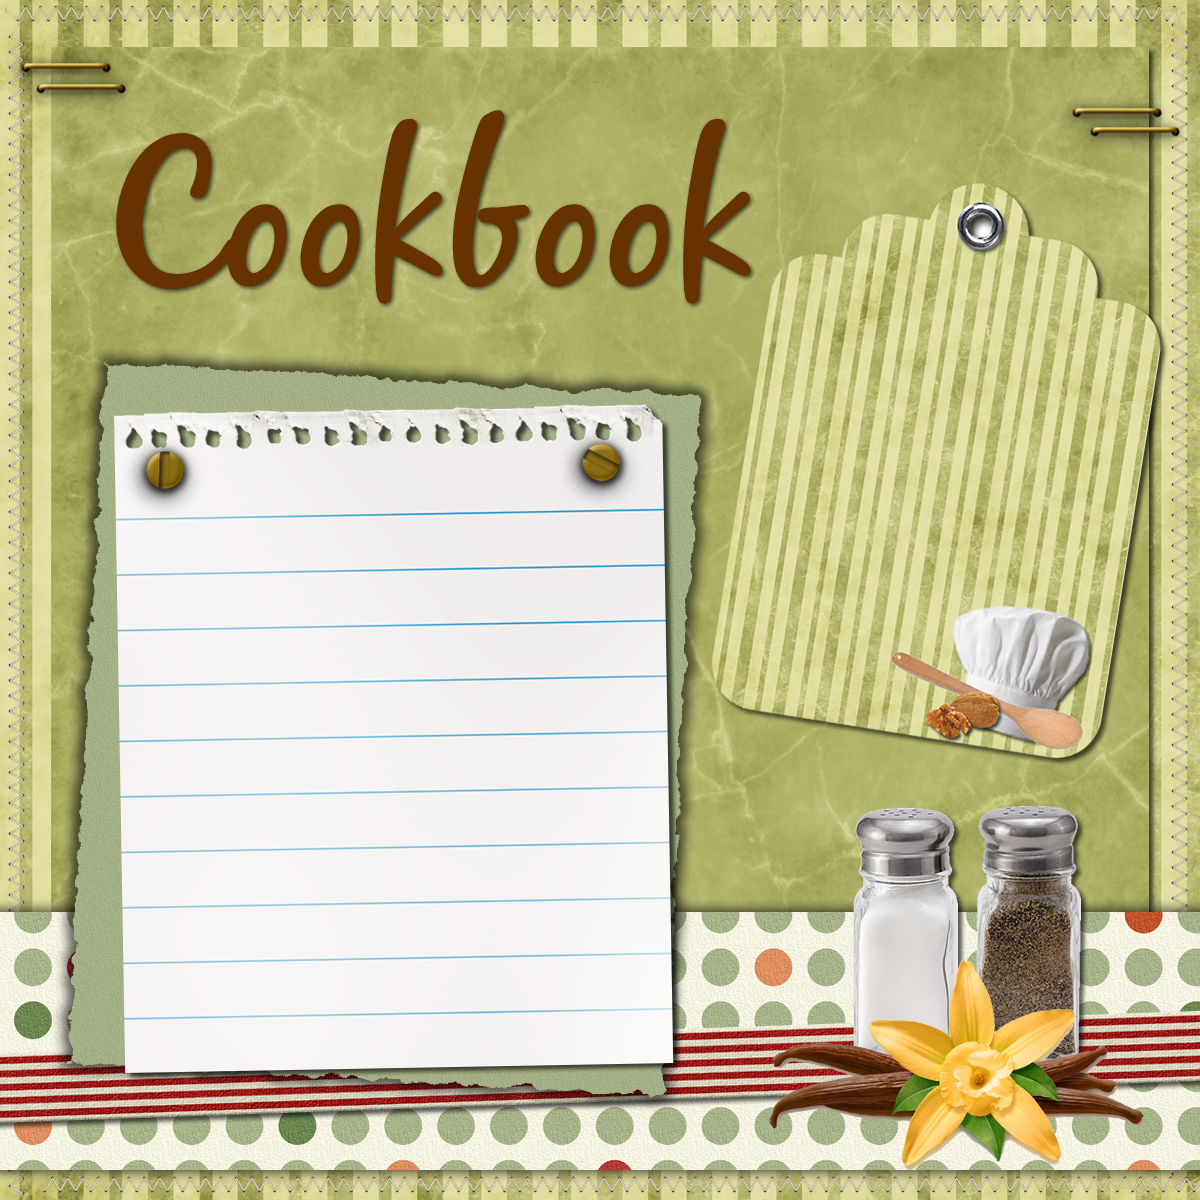 recipe book clip art free - photo #41